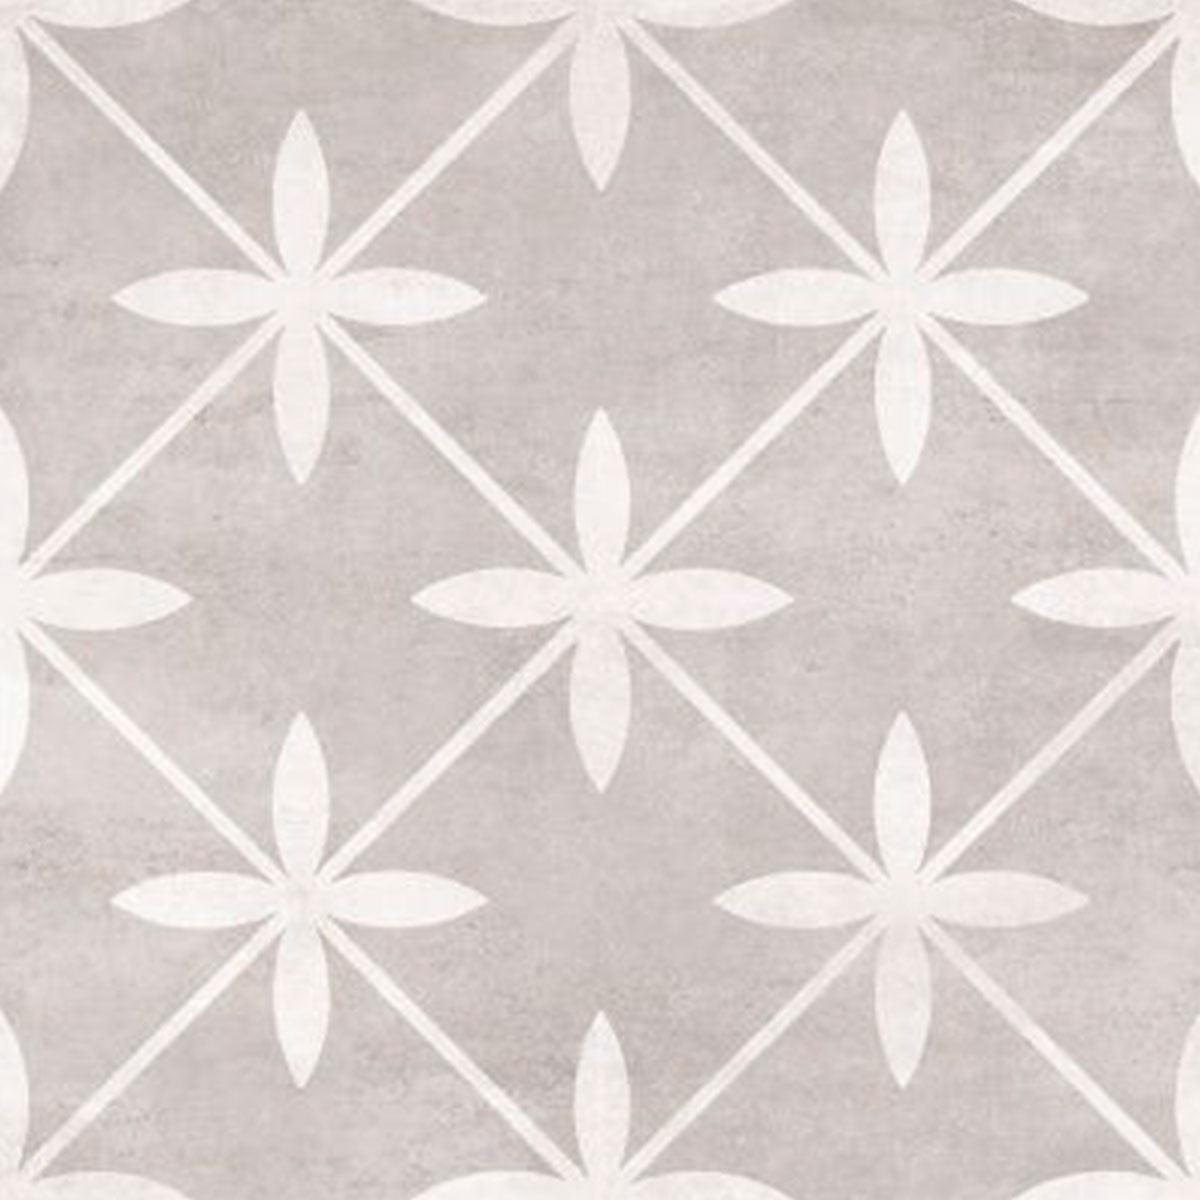 Laura Ashley Wicker Dove Grey Patterned Porcelain Tile 45x45cm